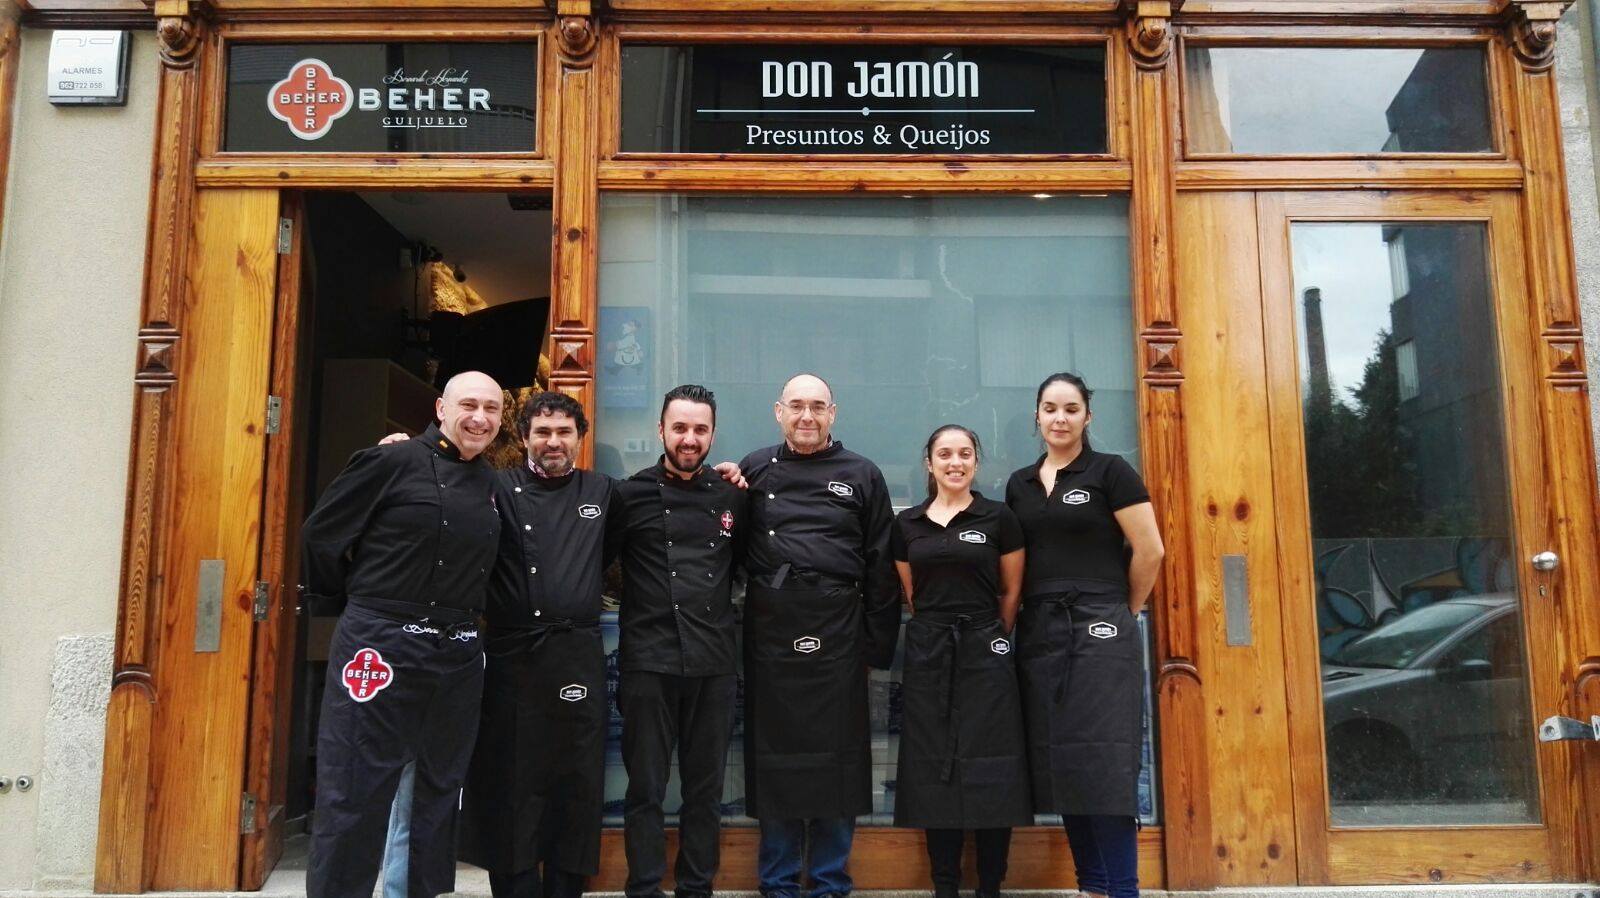 Restaurante Don Jamon